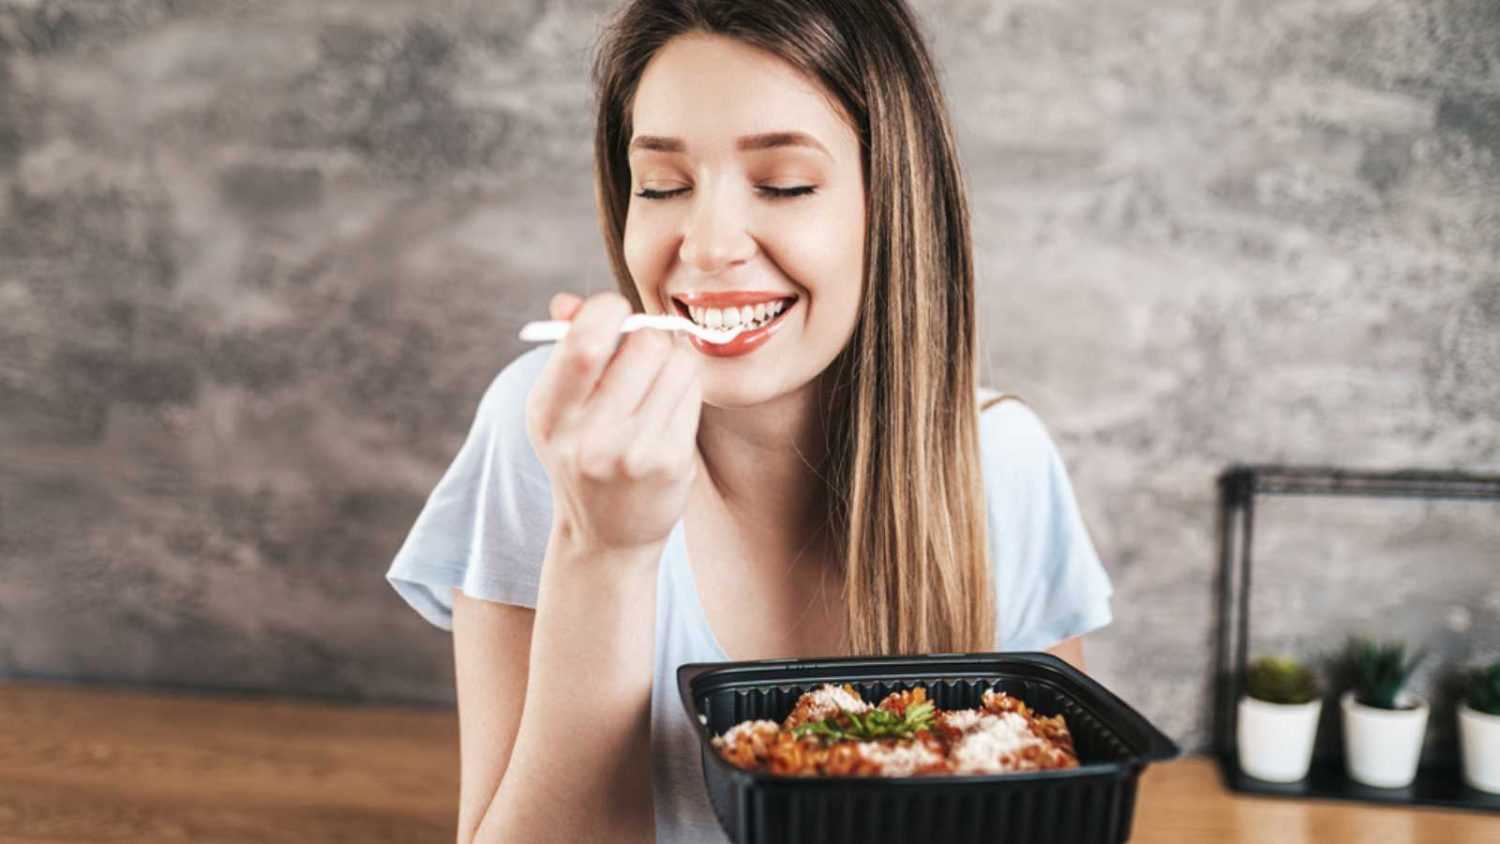 Woman eating and enjoying food